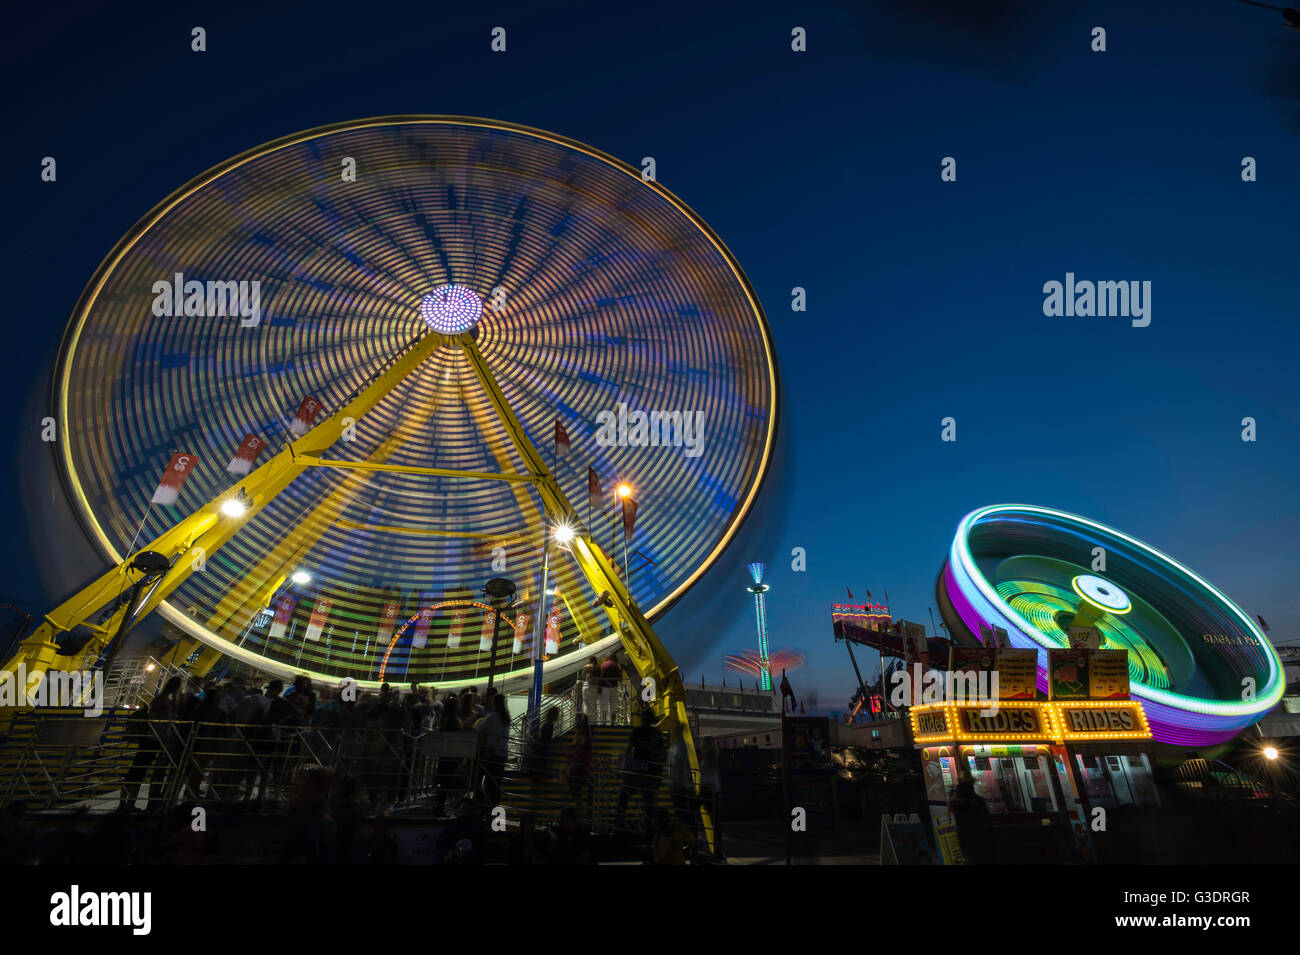 Riesenrad und andere Fahrten bei Nacht, Calgary Stampede Midway, Calgary, Alberta, Kanada Stockfoto